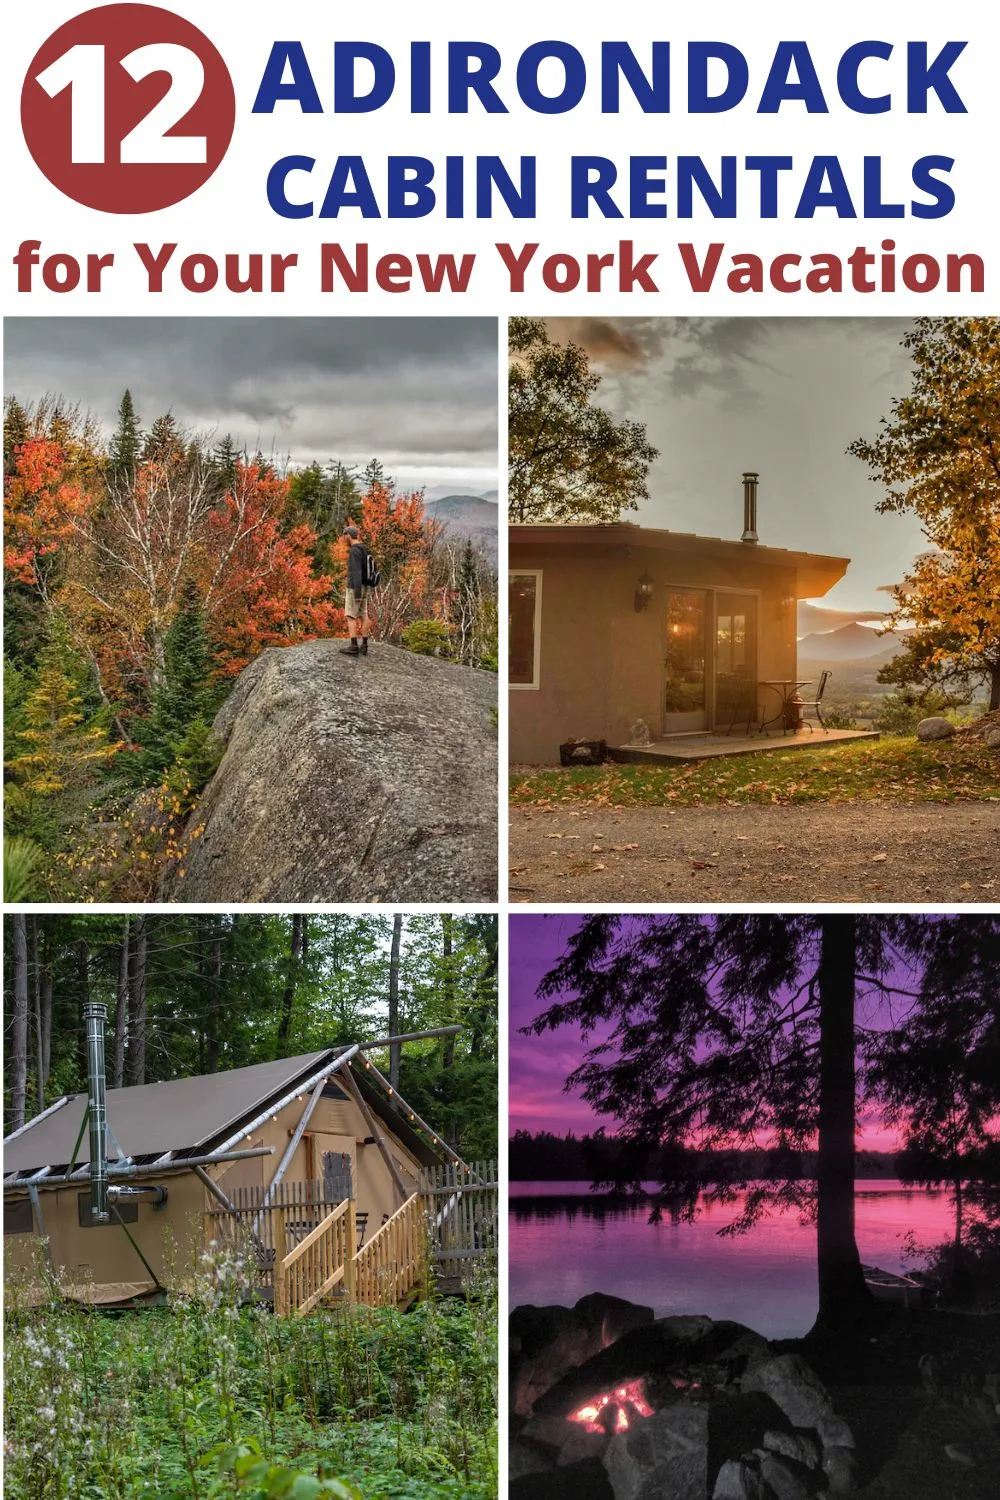 Adirondack cabins and scenery.